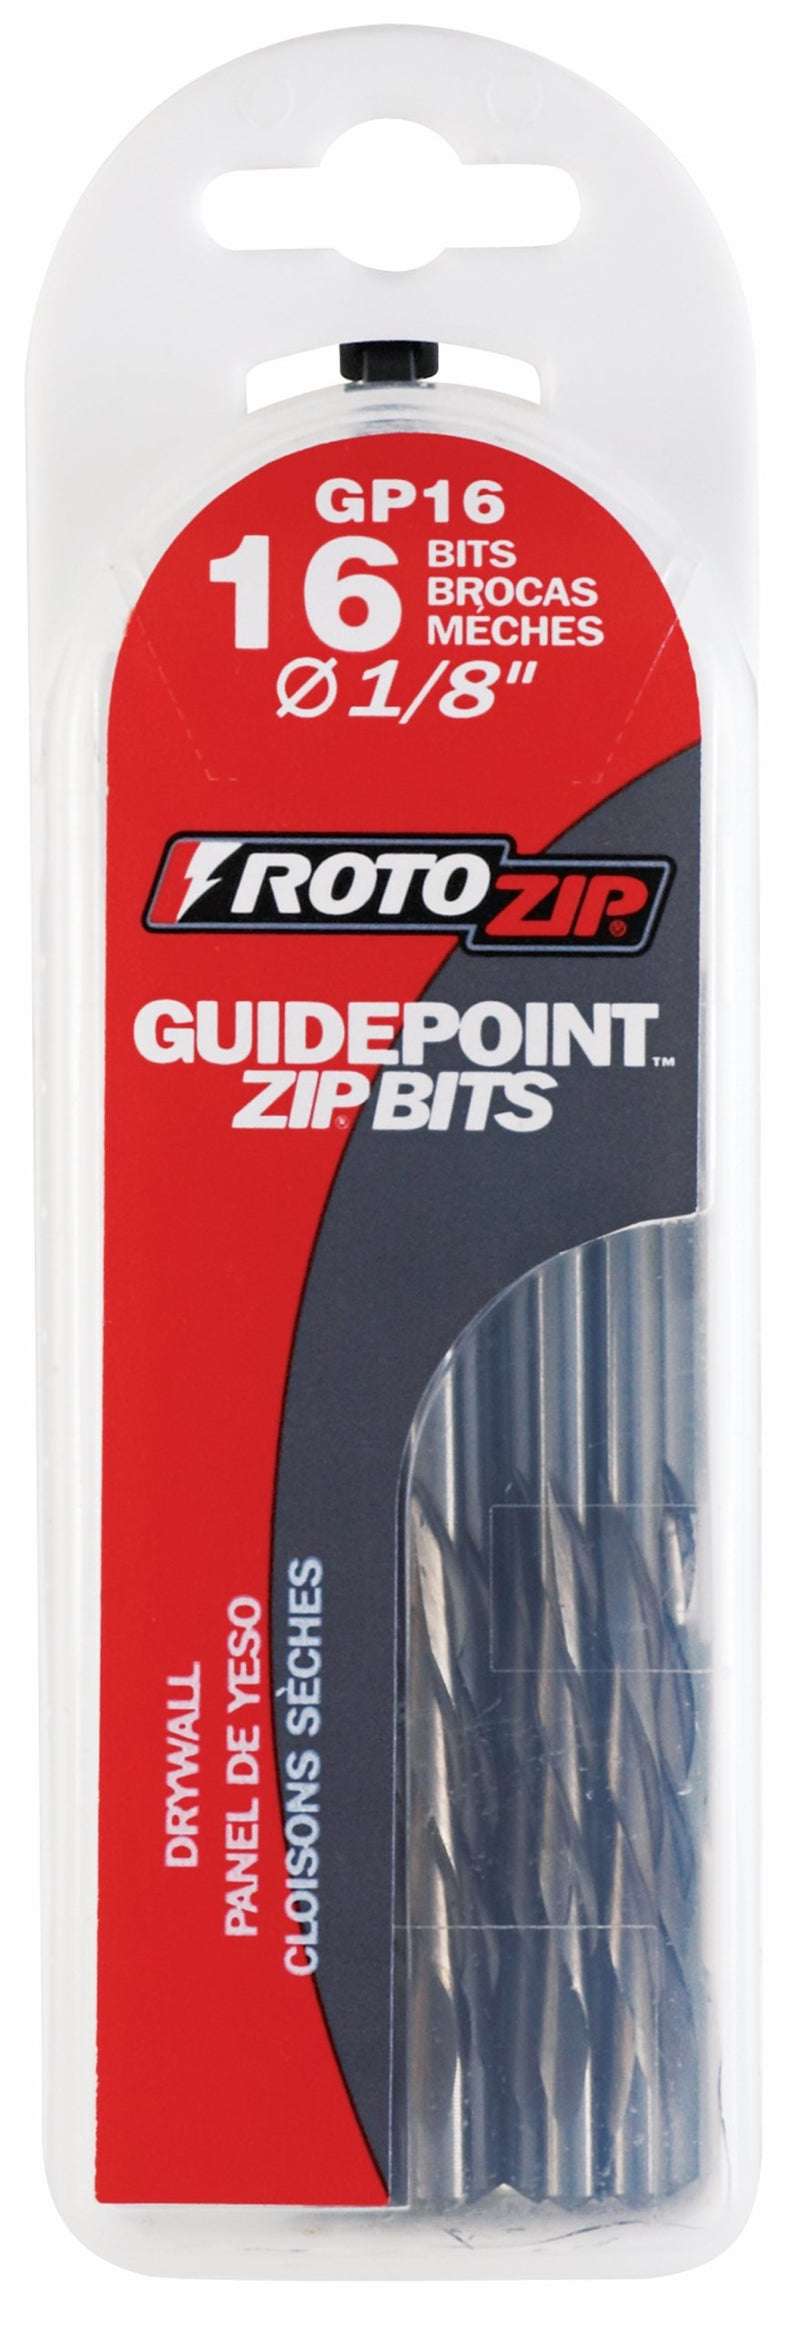 Roto Zip GP16 1/8-Inch Guide Point Drywall Cutting Zip Bit, 16-Pack - LeoForward Australia